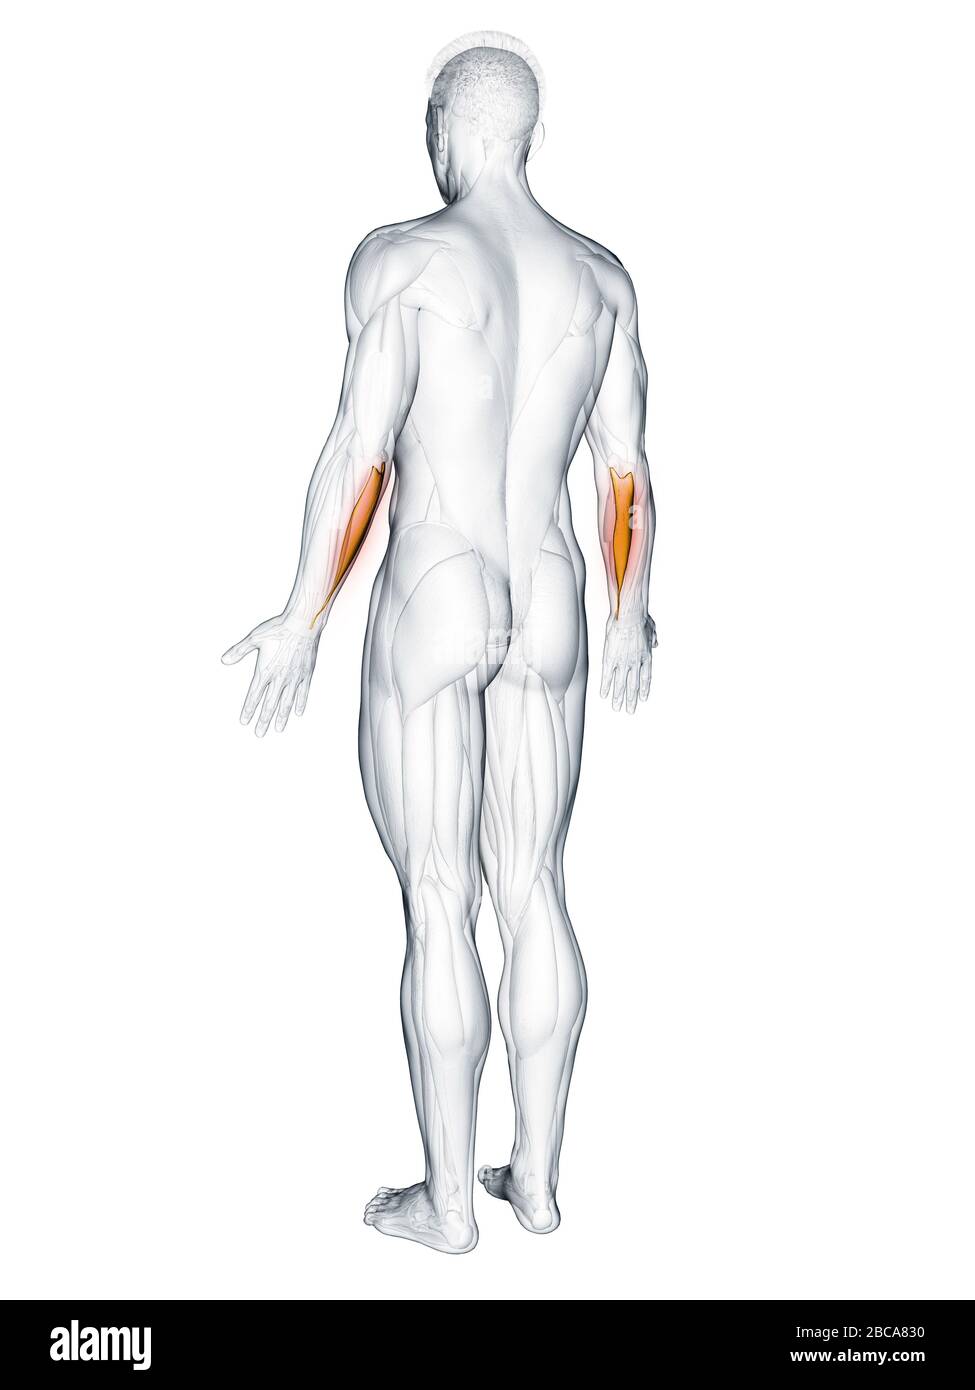 Flexor carpi ulnaris muscle, illustration. Stock Photo